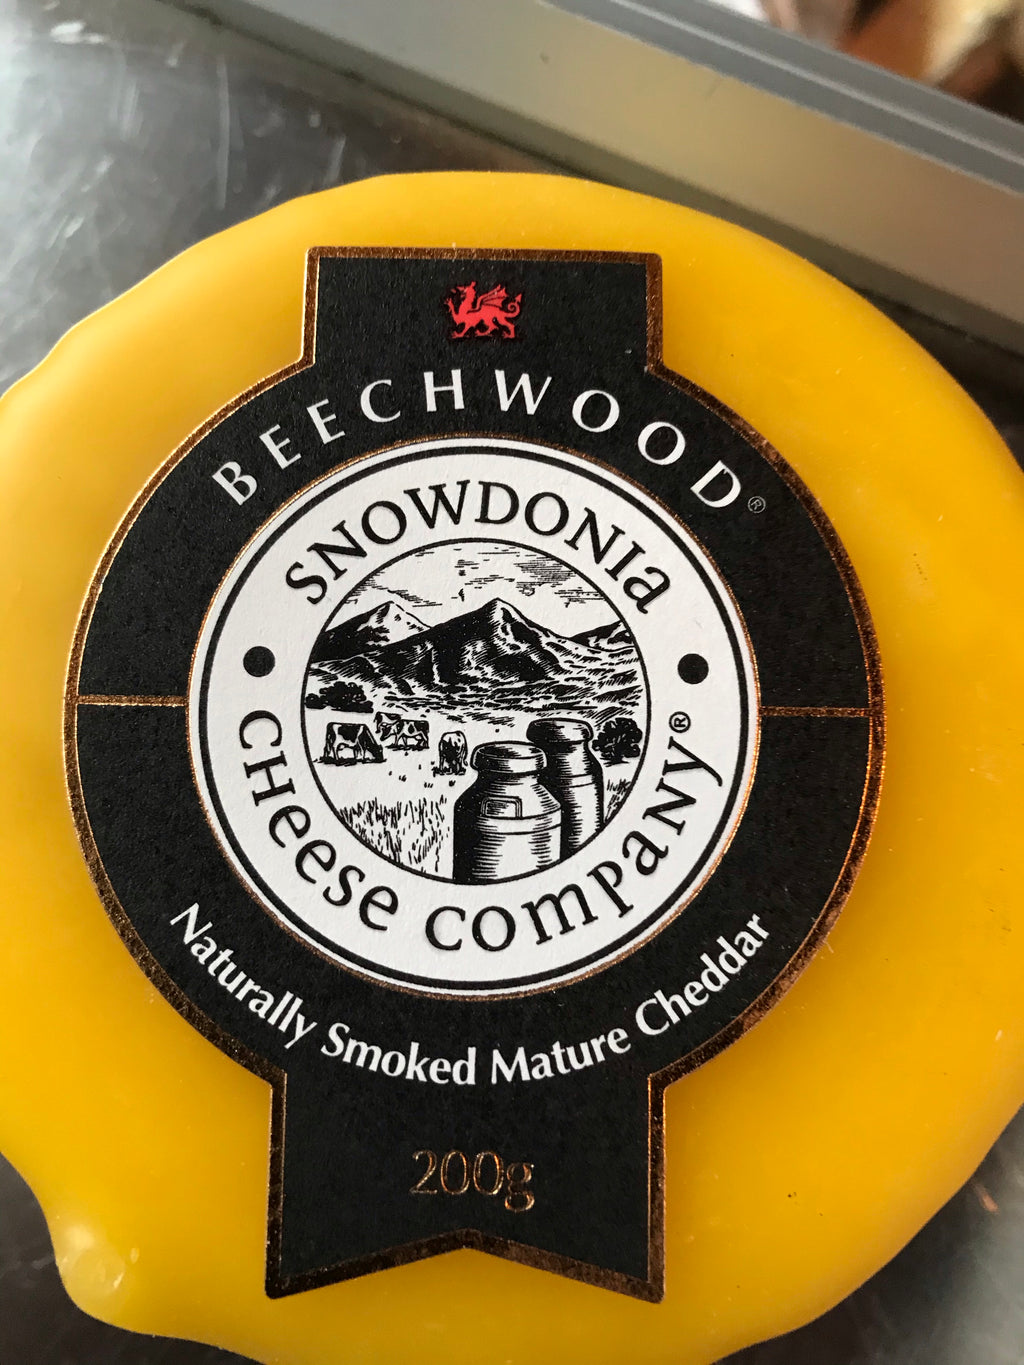 Snowdonia Beechwood - Smoked Cheddar 200g -£4.50